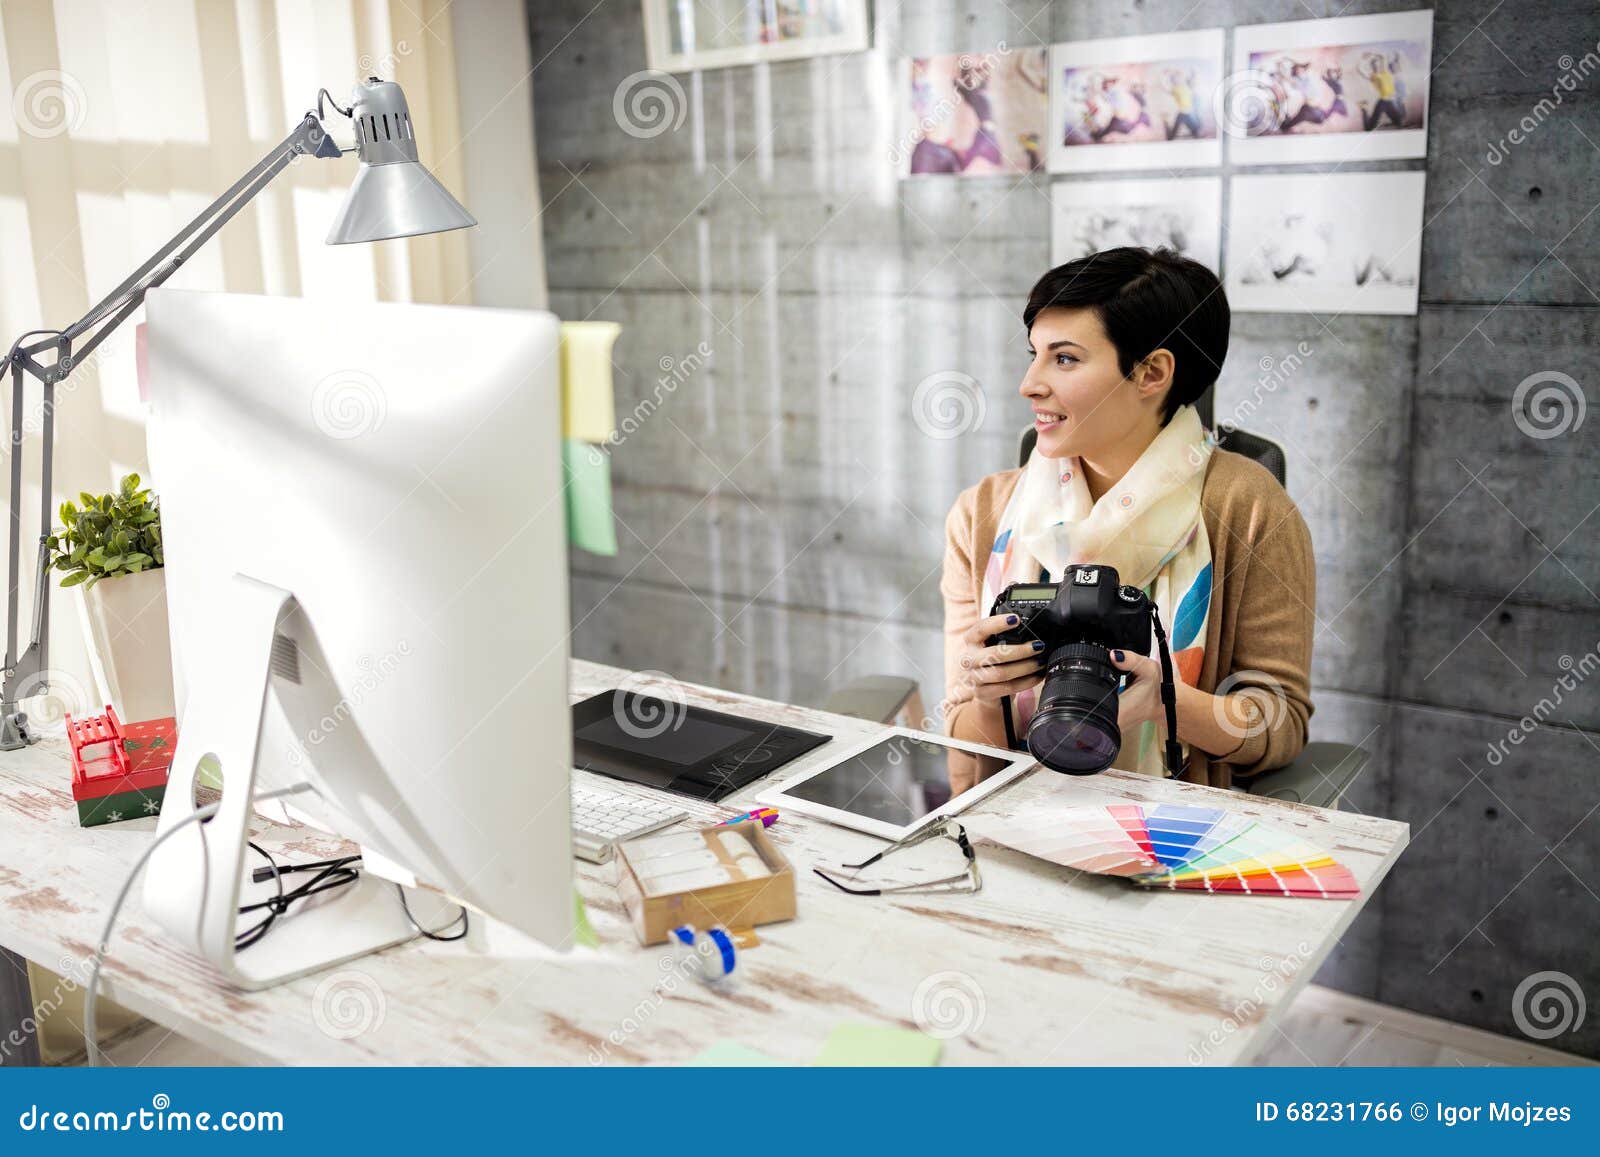 employed woman working in photo studio